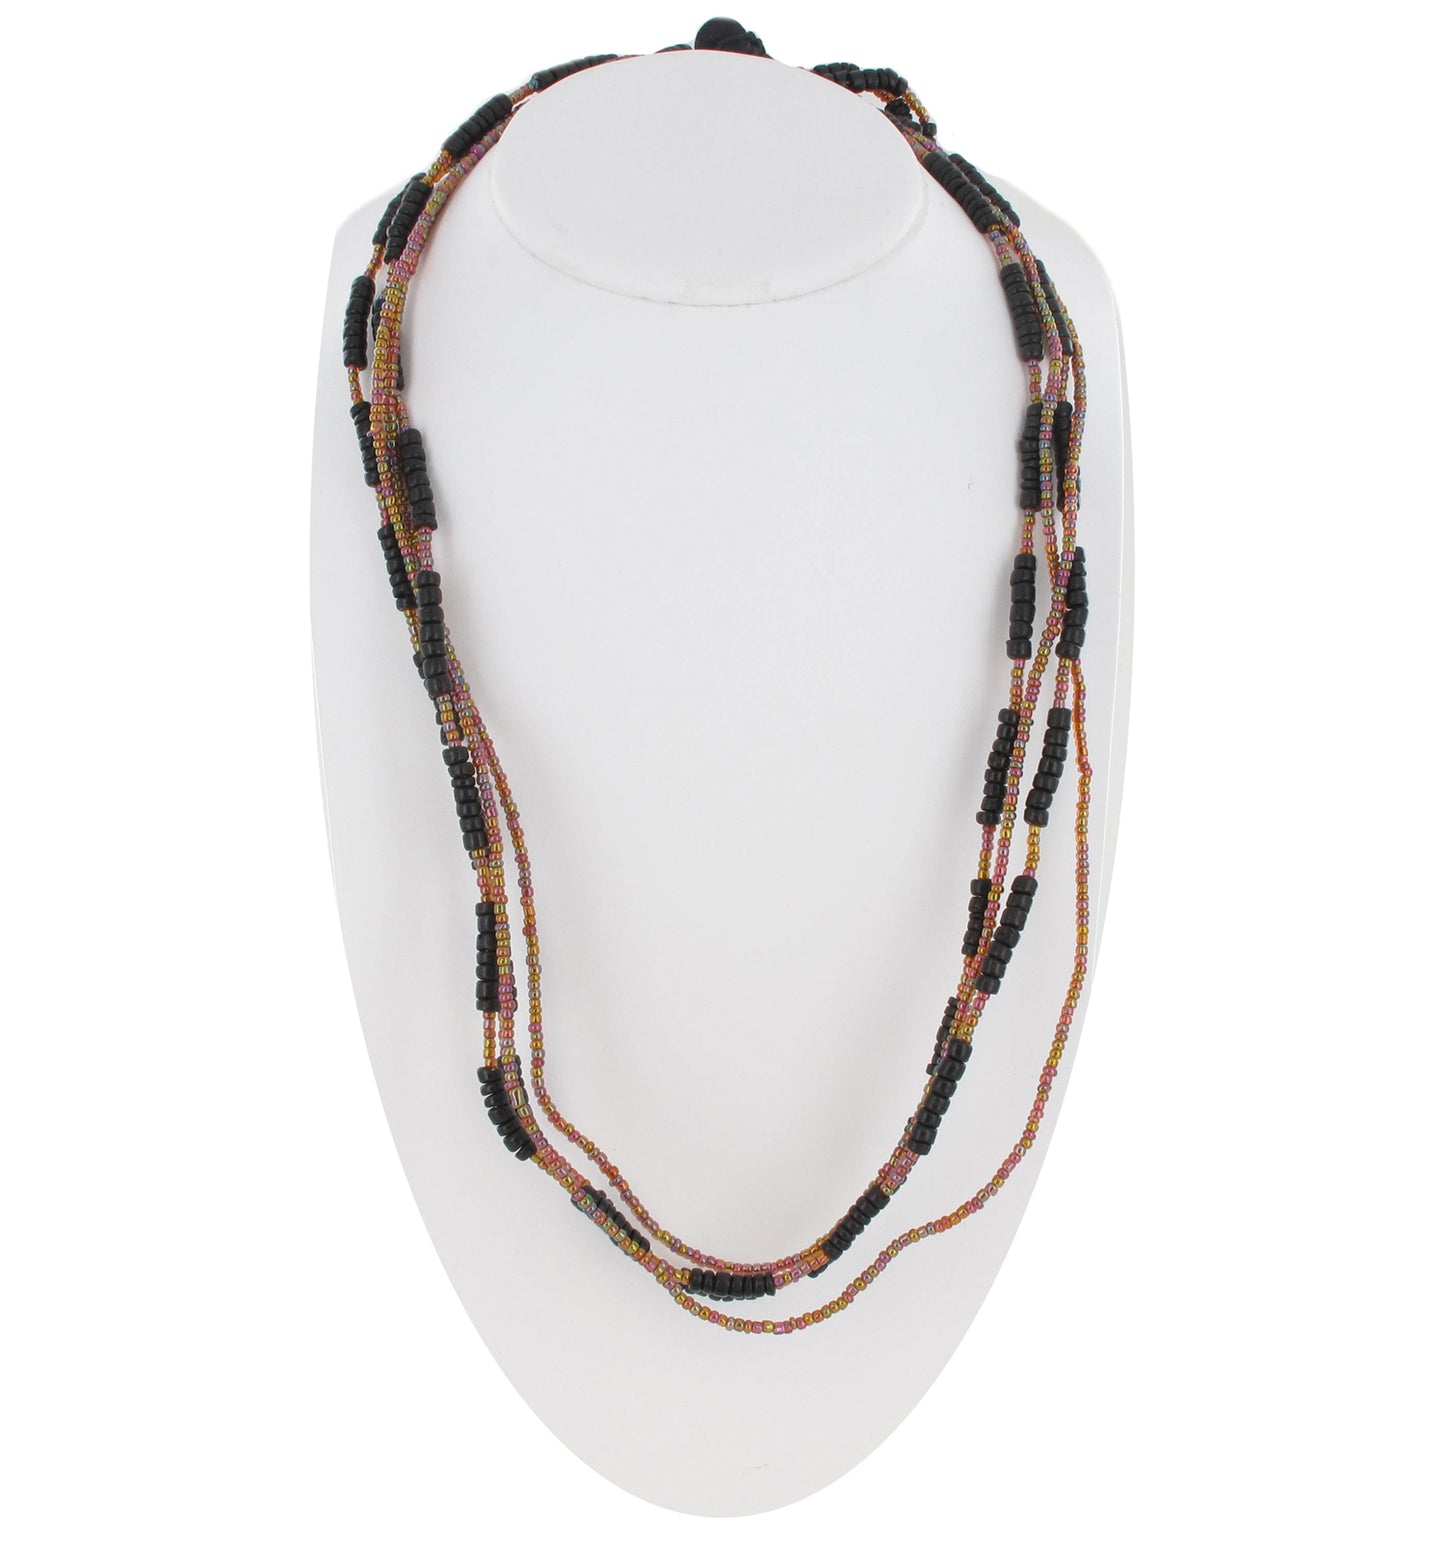 Crazy Wire Beaded Wood Torsade Black Multicolor Multistrand Collar Necklace 40"